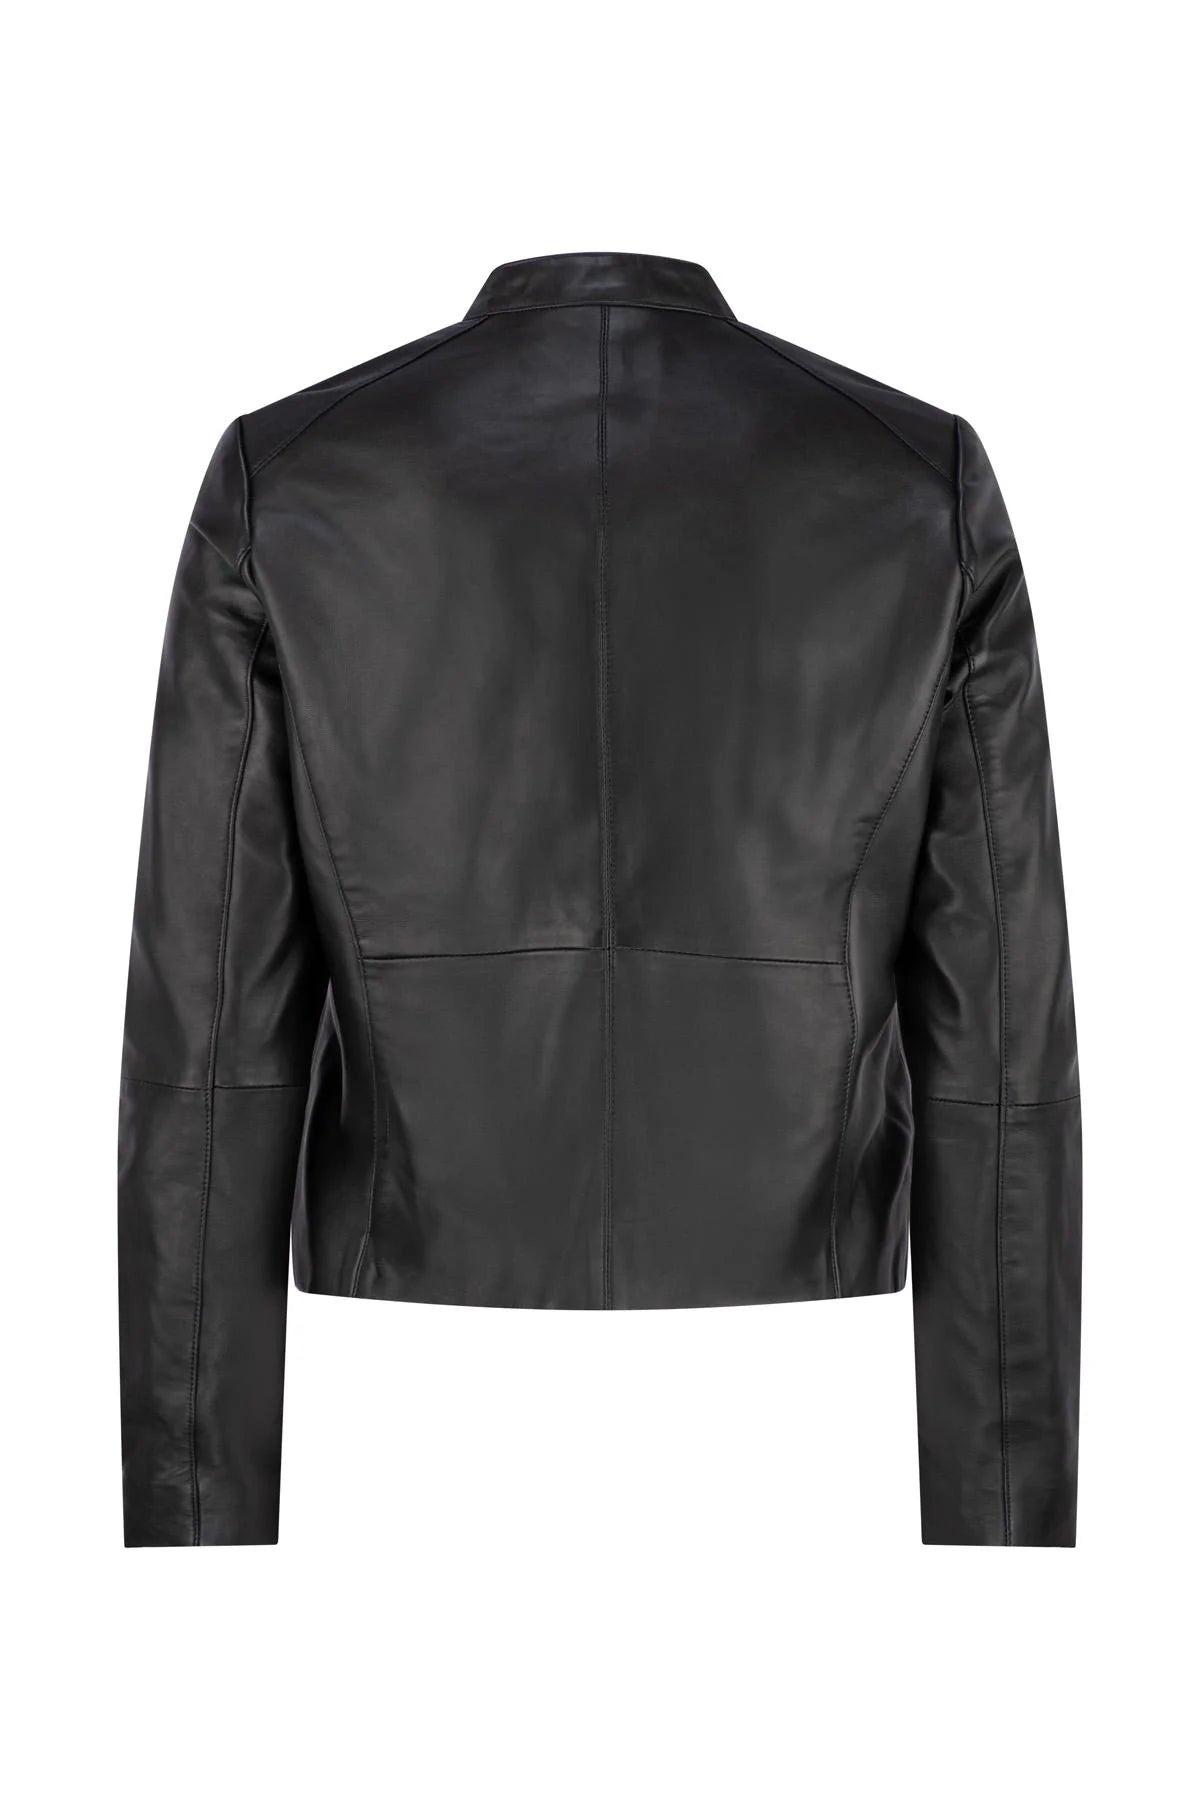 Hudson Leather Bomber Jacket - Black